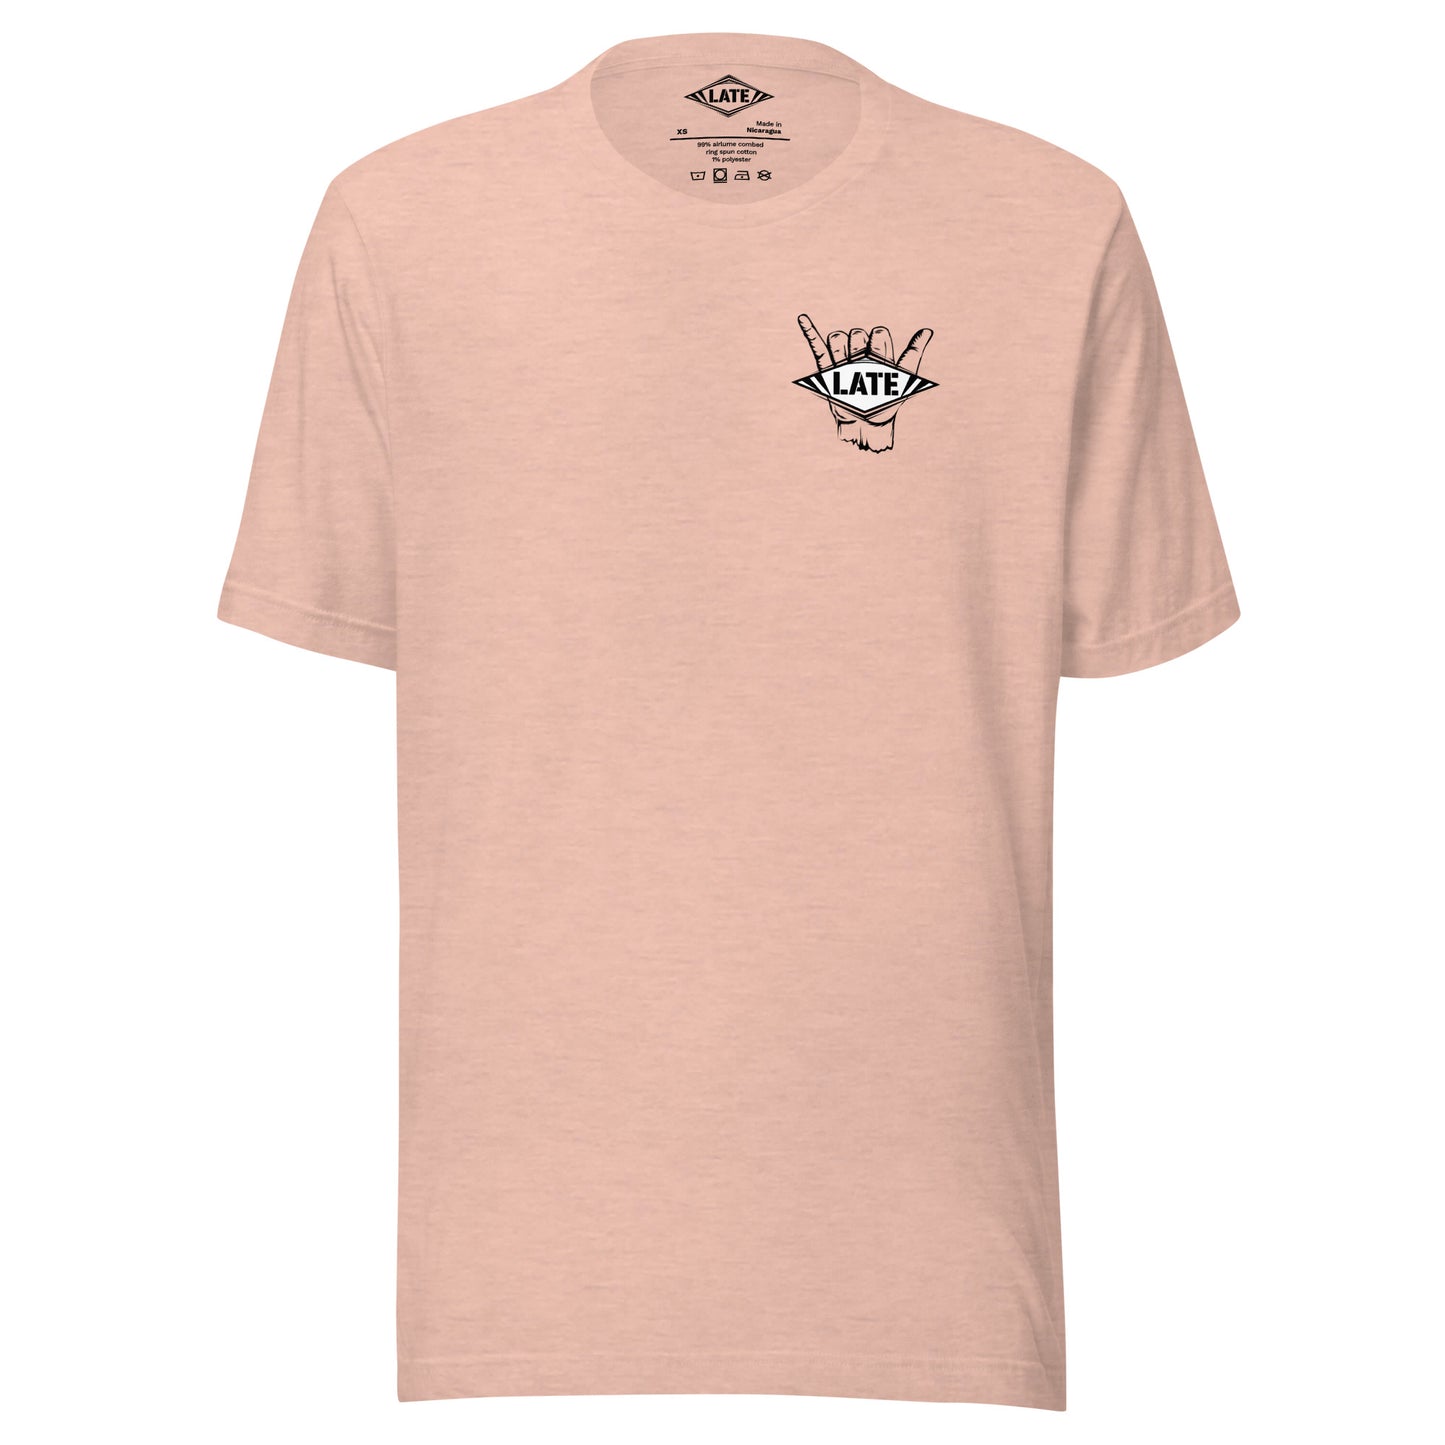 T-Shirt surfing main shaka avec le logo Late face avant t-shirt unisex couleur rose